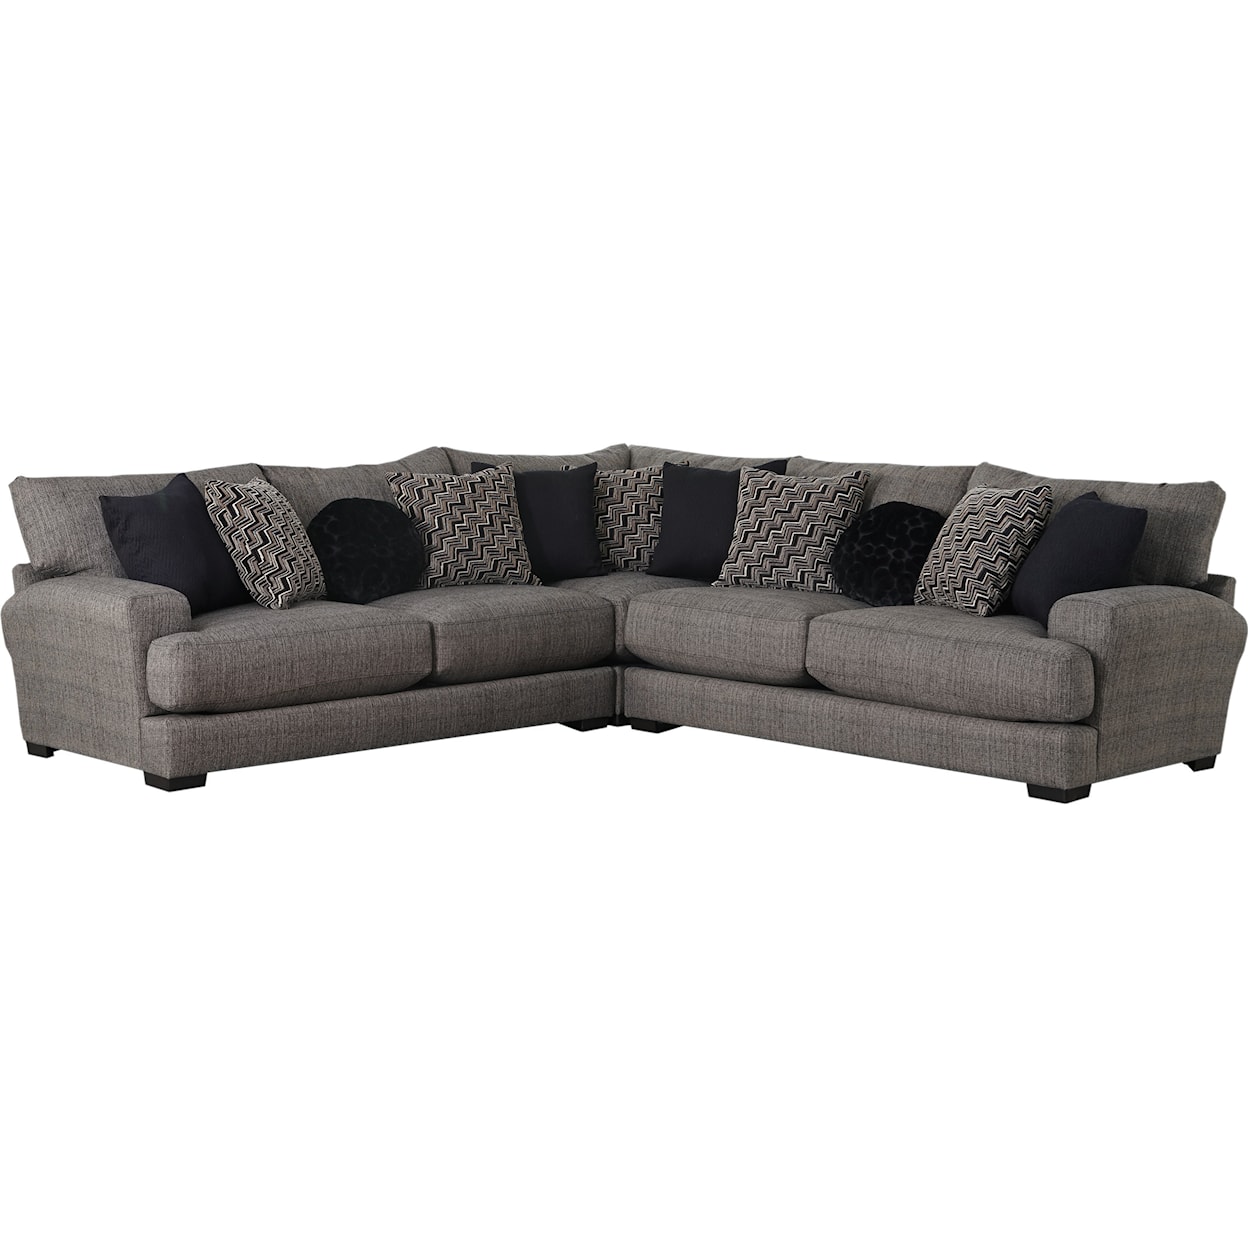 Jackson Furniture 4498 Ava Sectional Sofa with 4 Seats